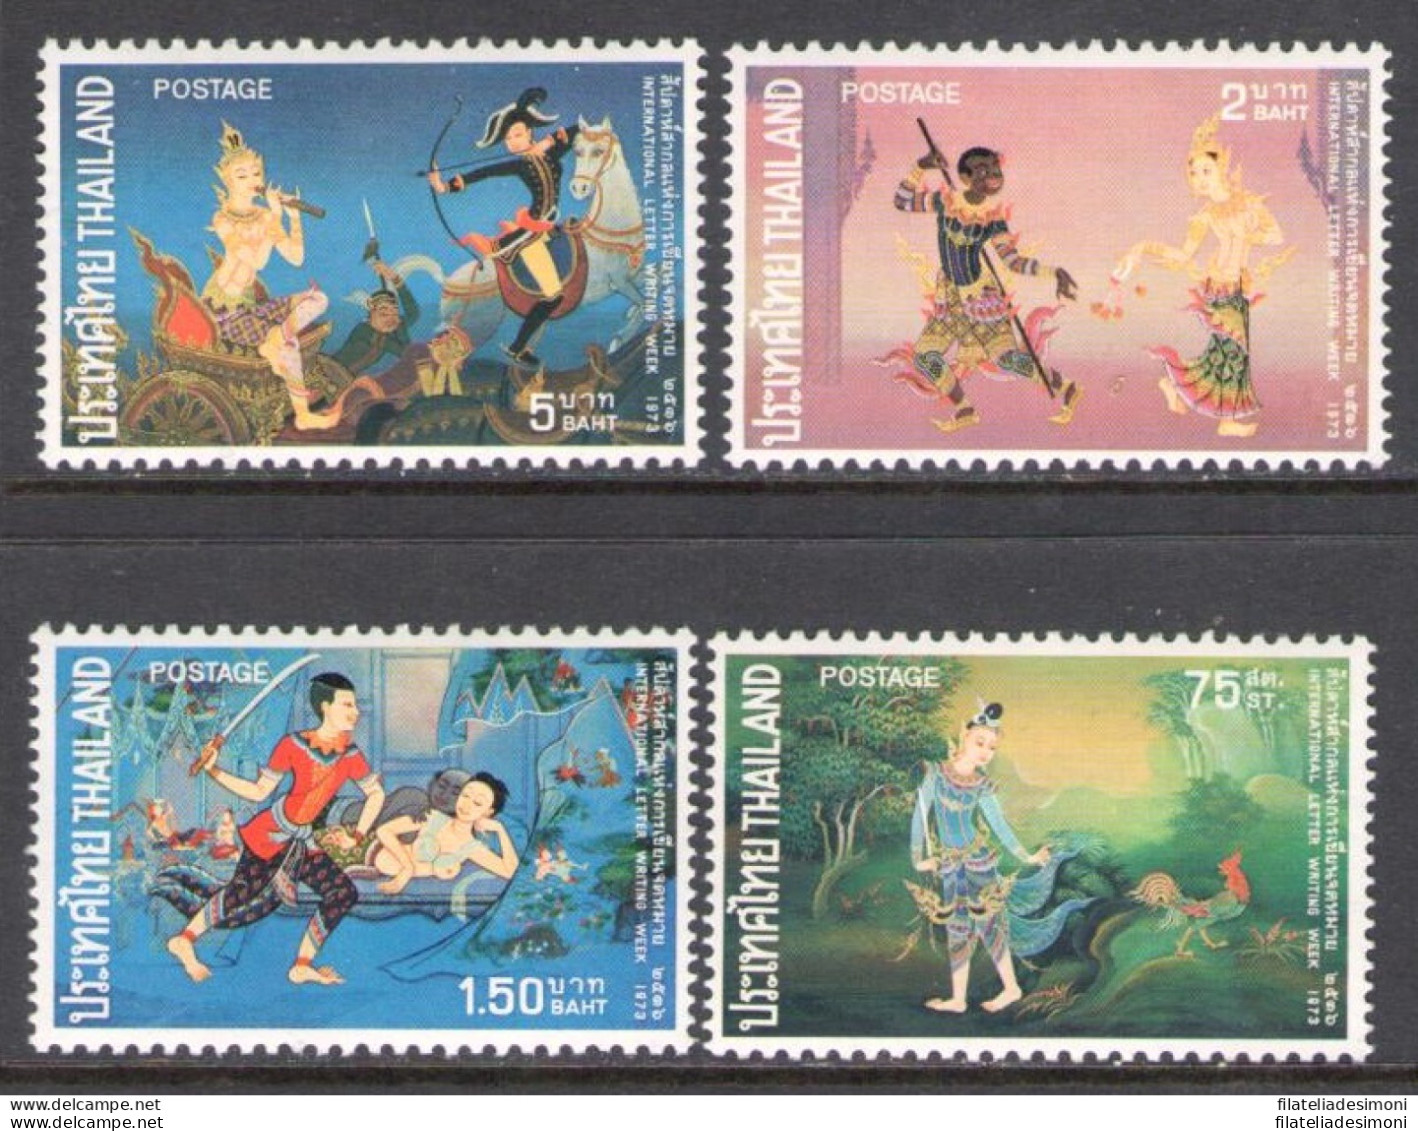 1973 Thailand ,Tailandia - SG 776-779 - Settimana Corrispondenza-International Correspondence Week 4 Valori MNH** - Tailandia